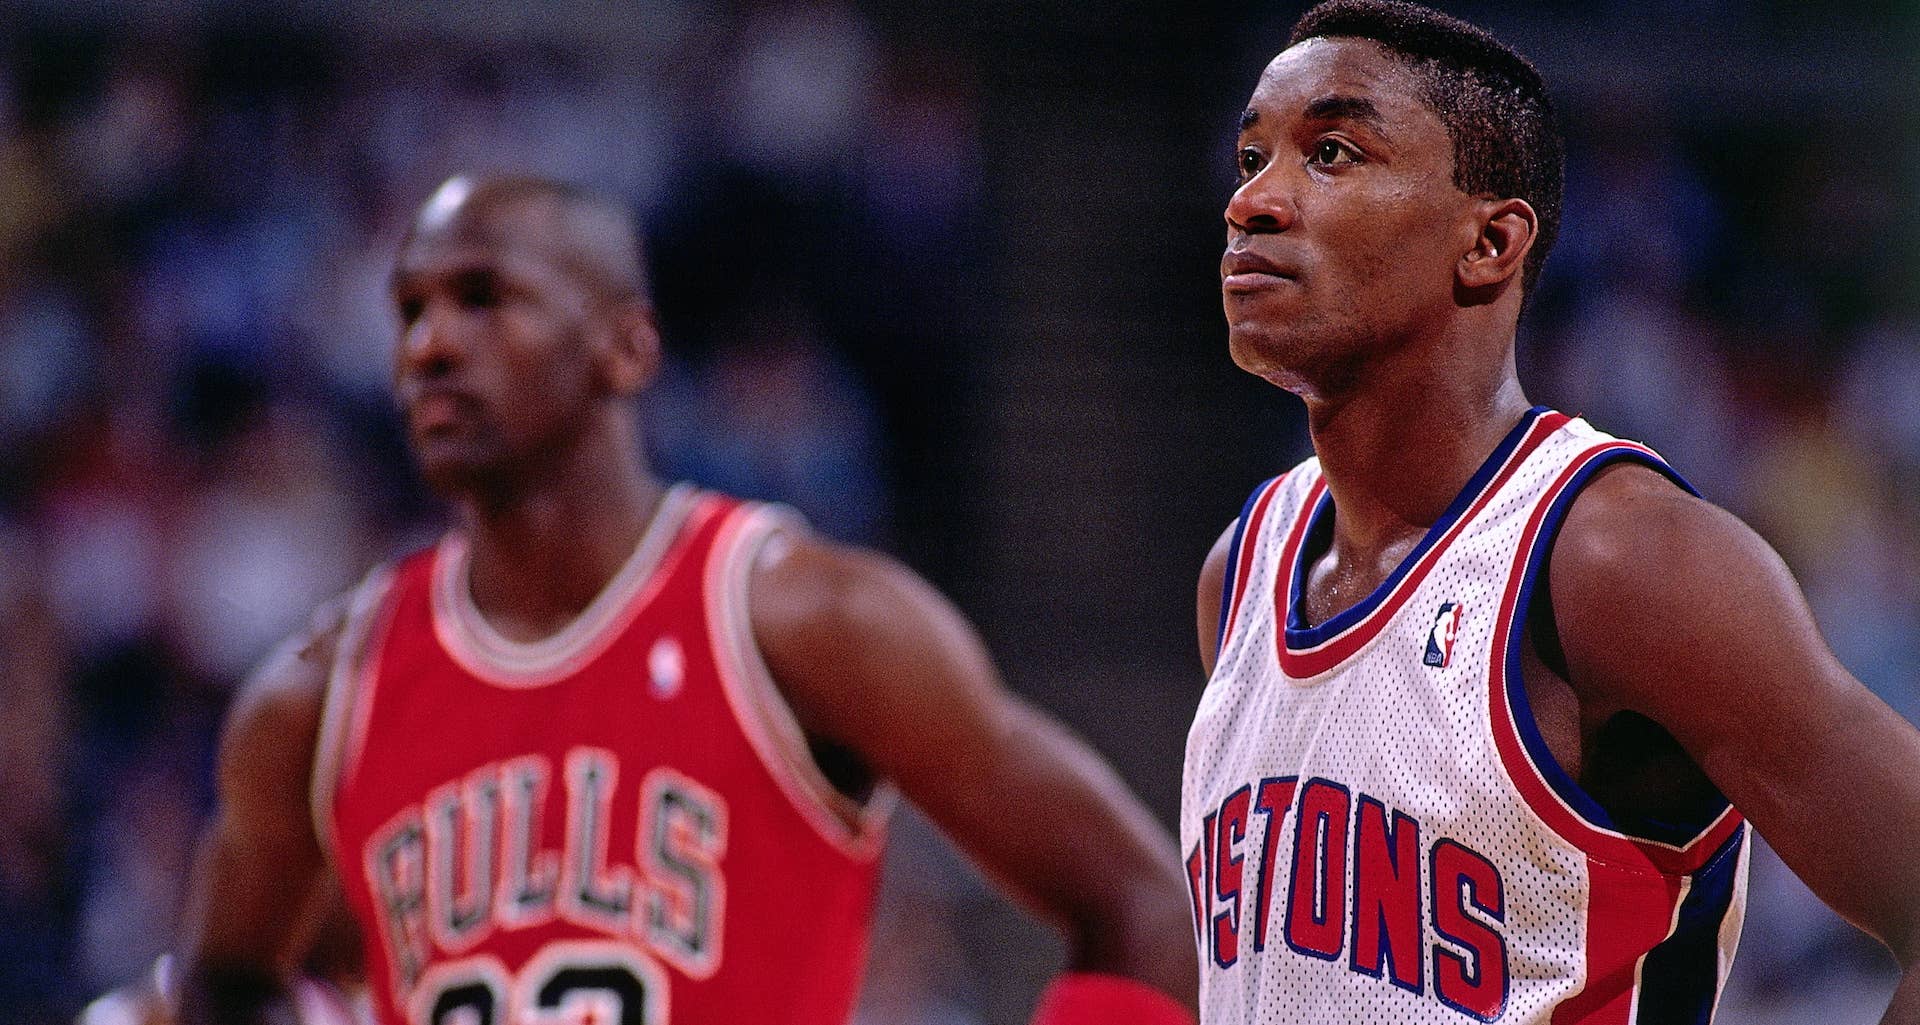 Isiah Thomas' Detroit Pistons face off against Michael Jordan's Chicago Bulls in 1989